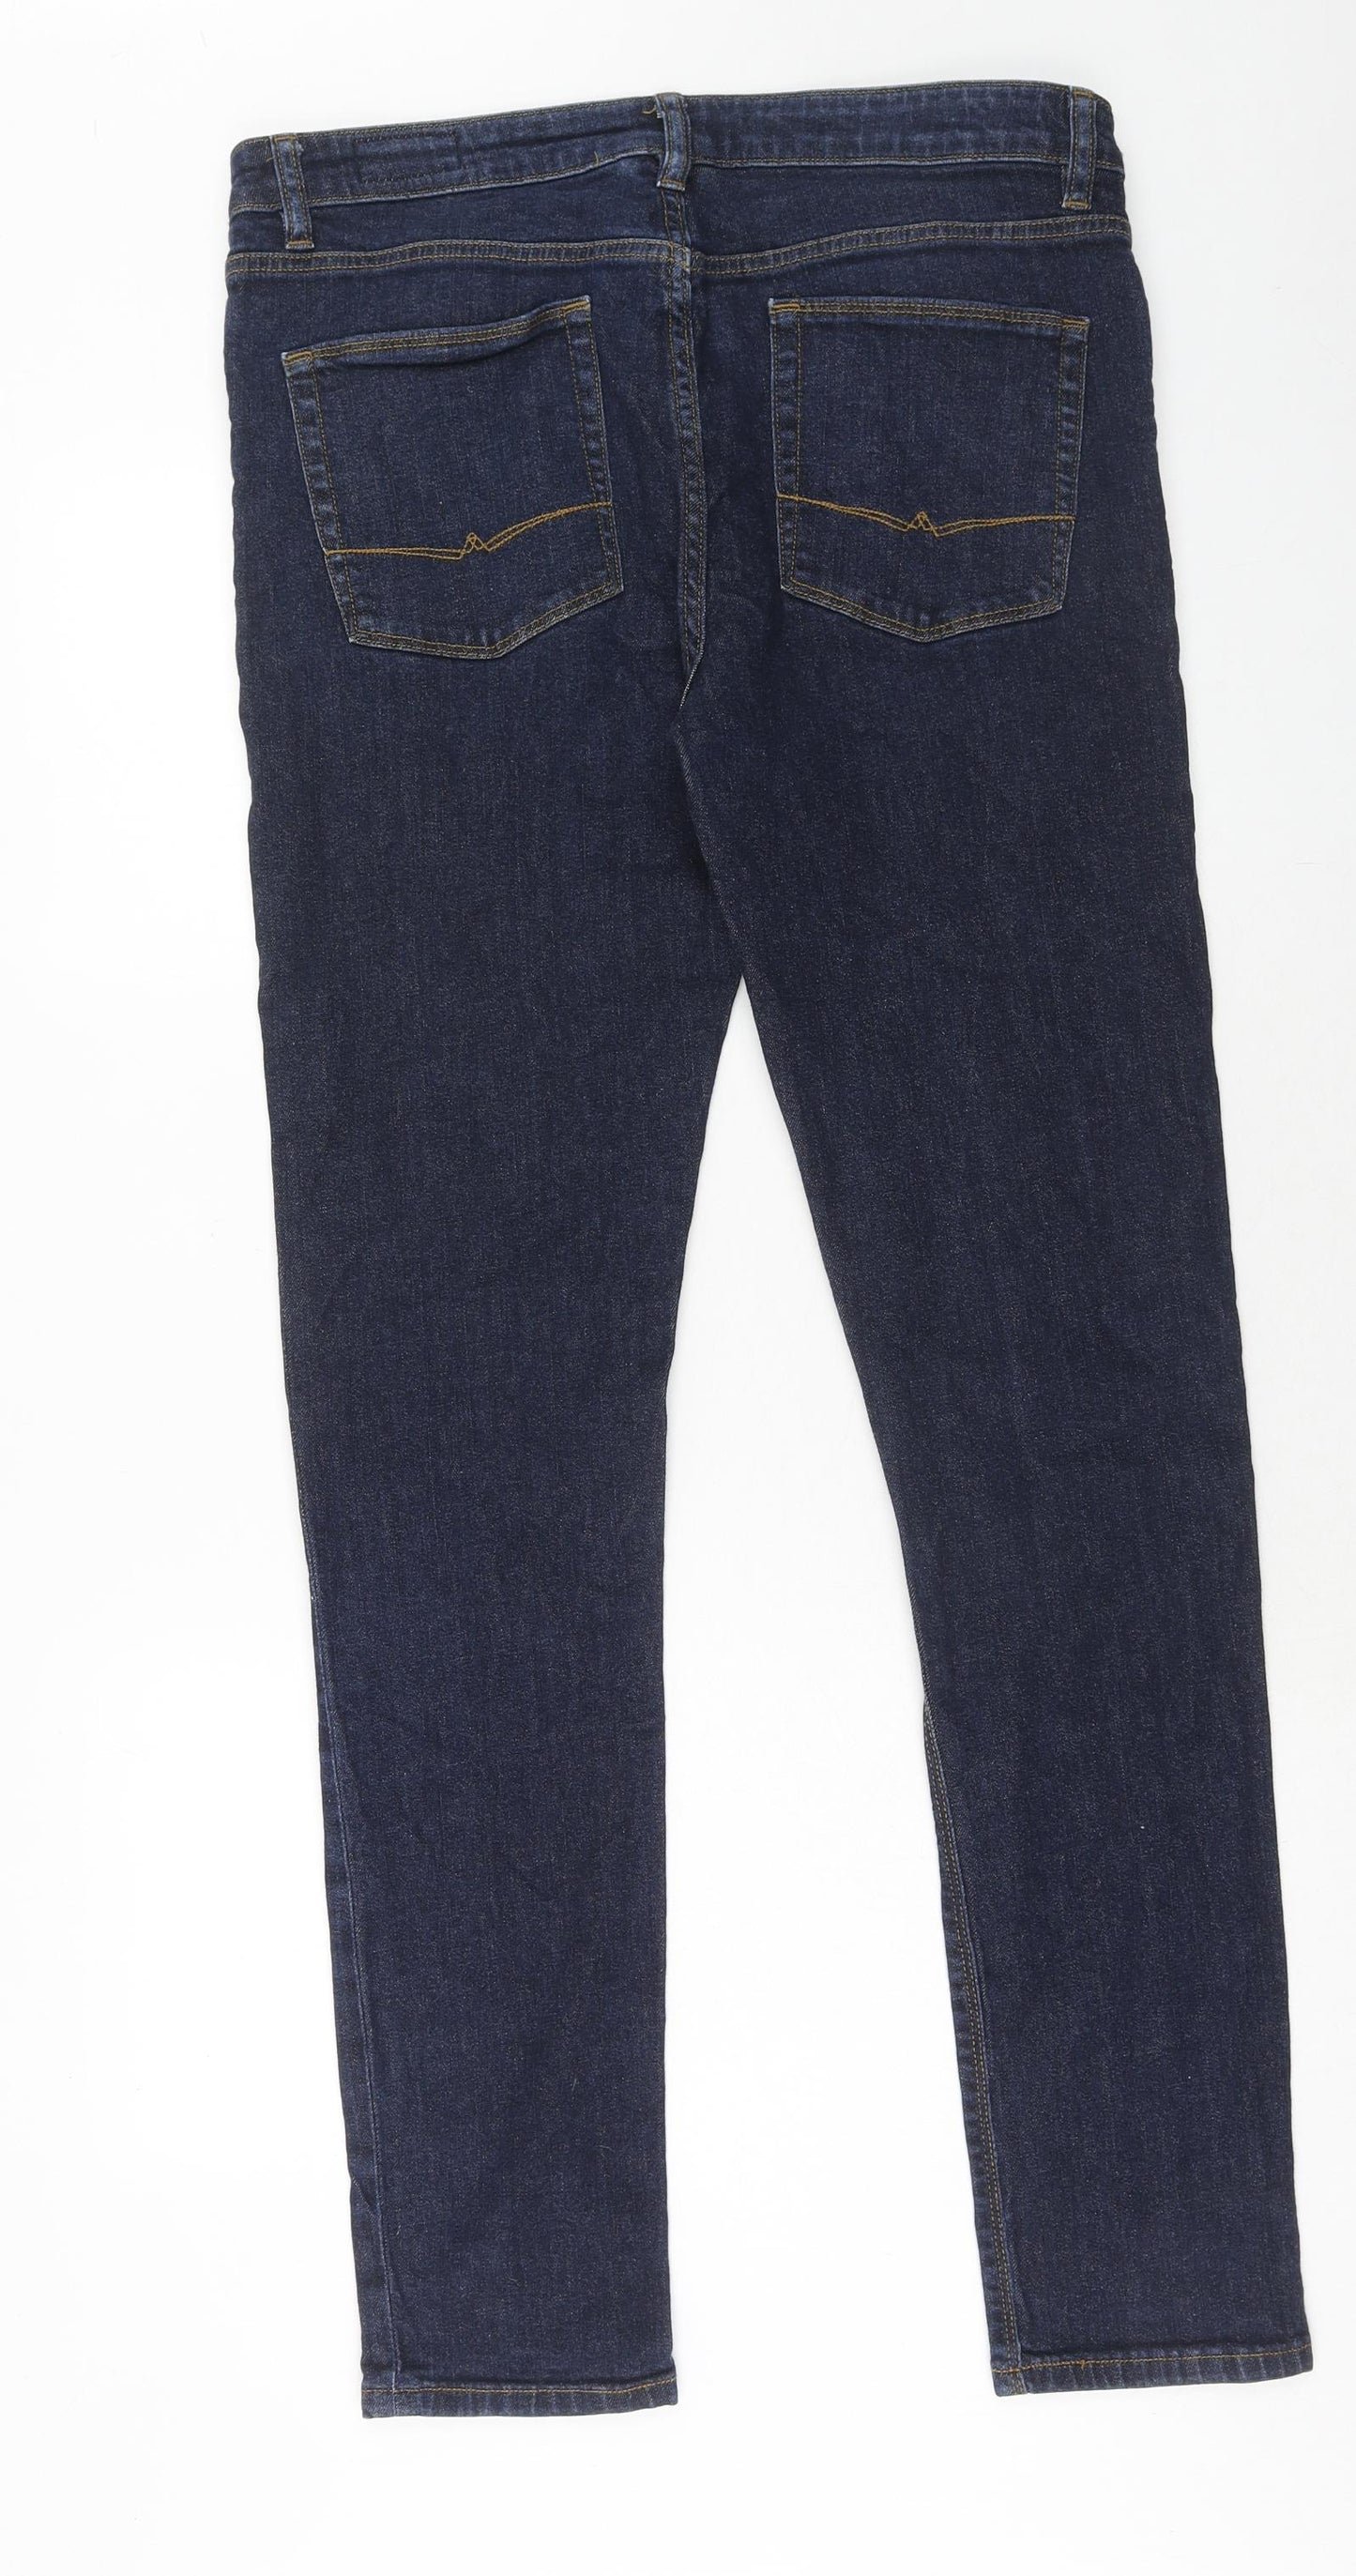 ASOS Mens Blue Cotton Skinny Jeans Size 34 in L34 in Regular Zip - Long Leg